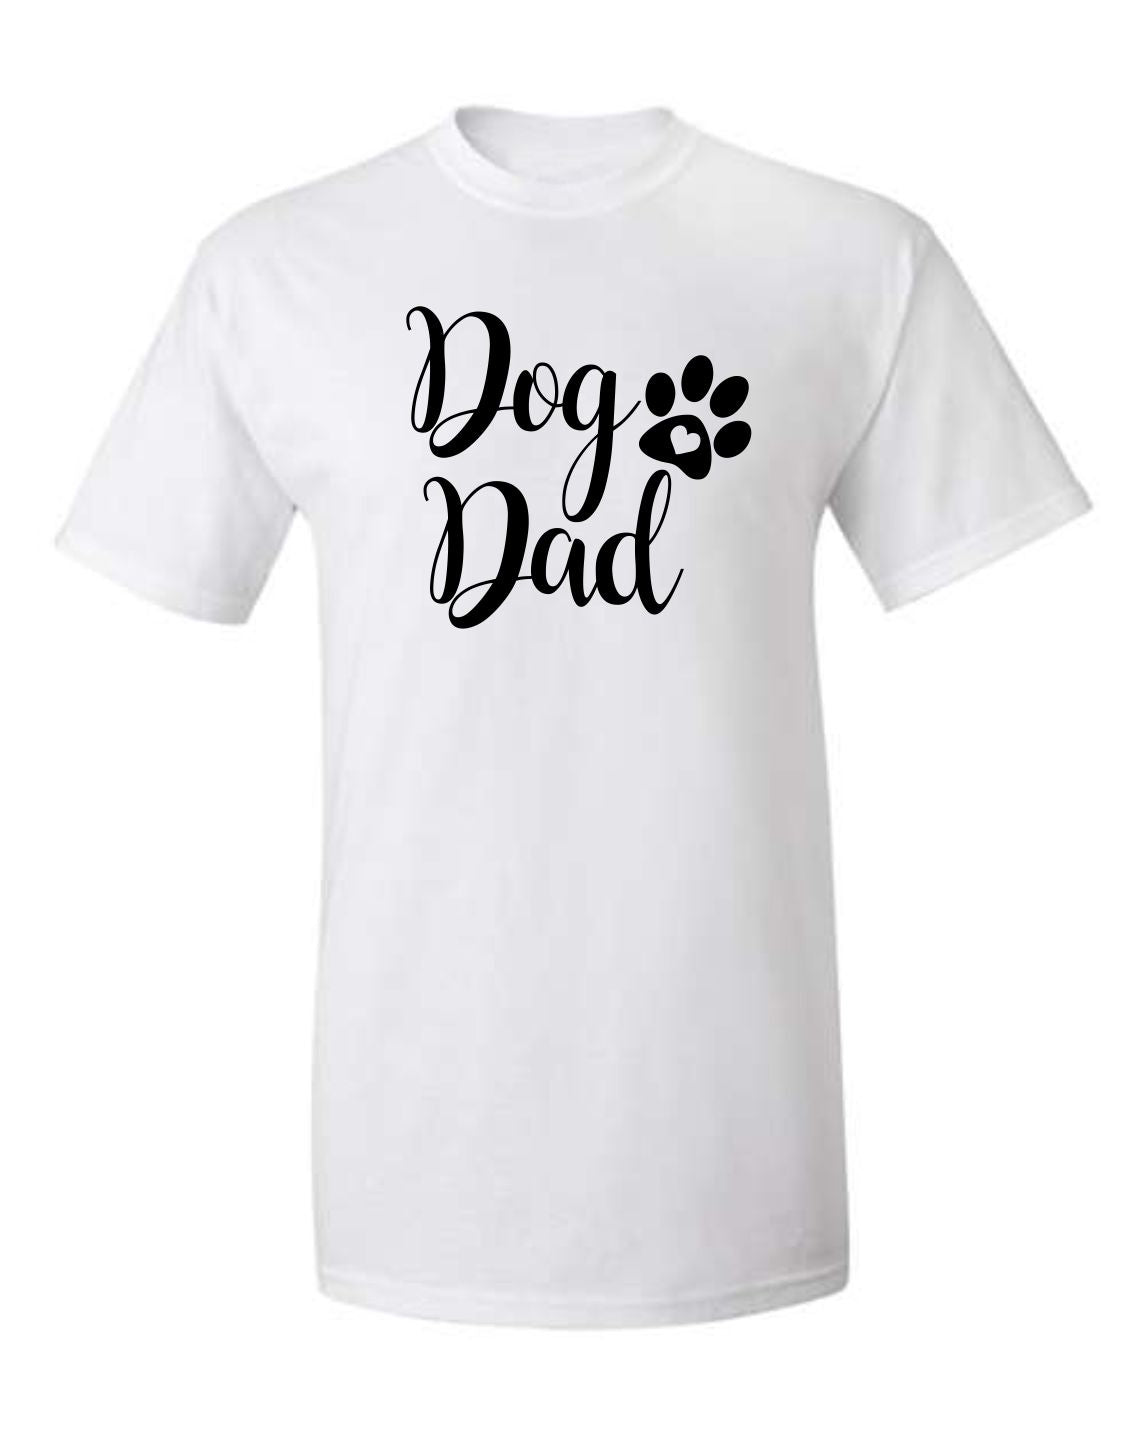 "Dog Dad" T-Shirt